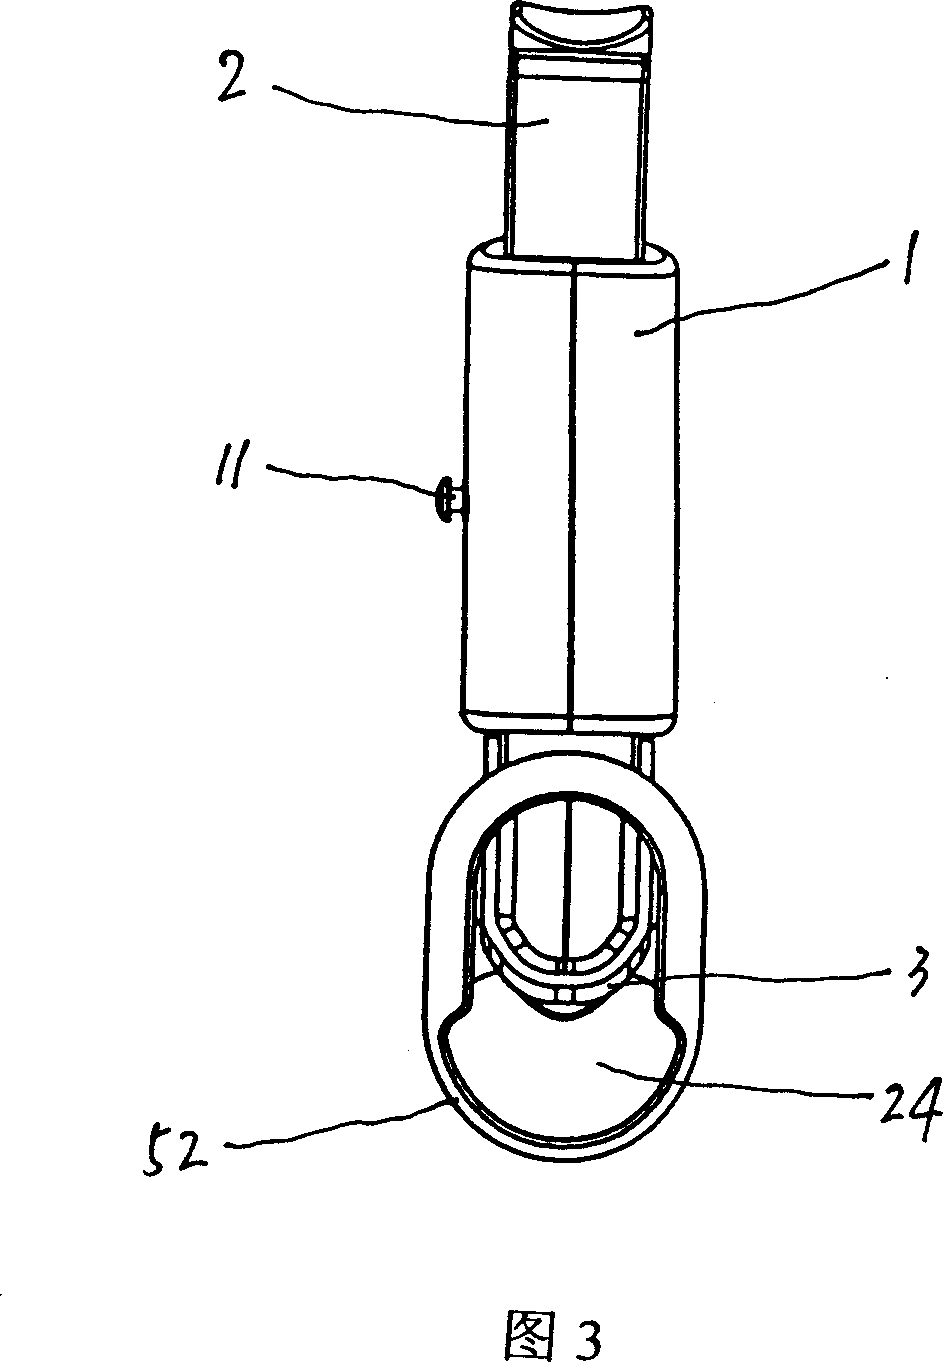 Integral electronic vaginal dilator